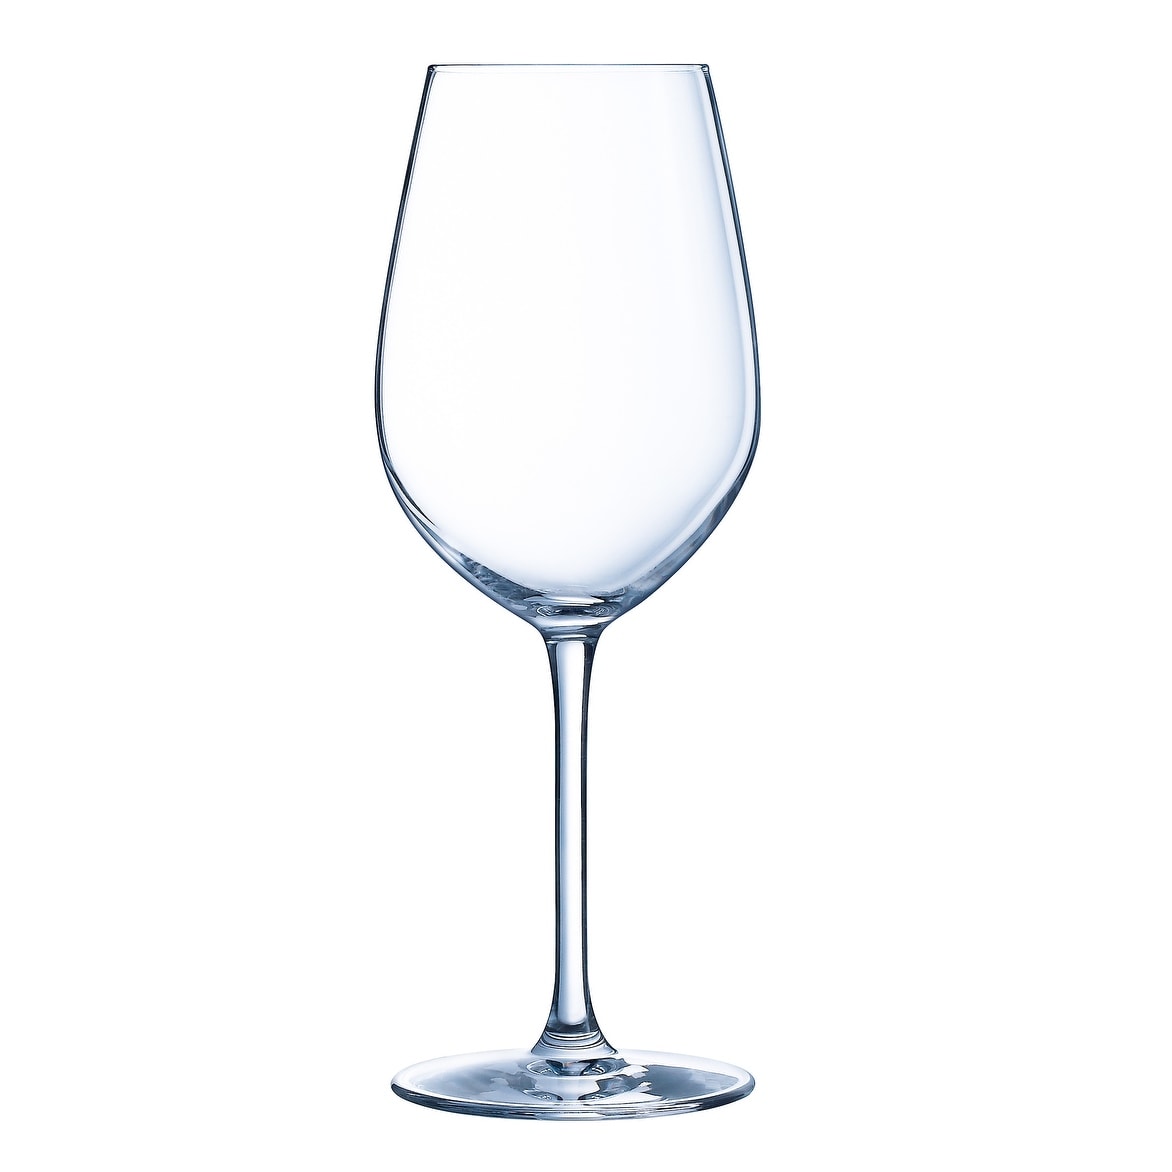 11.75 oz. Chef & Sommelier White Wine Glasses